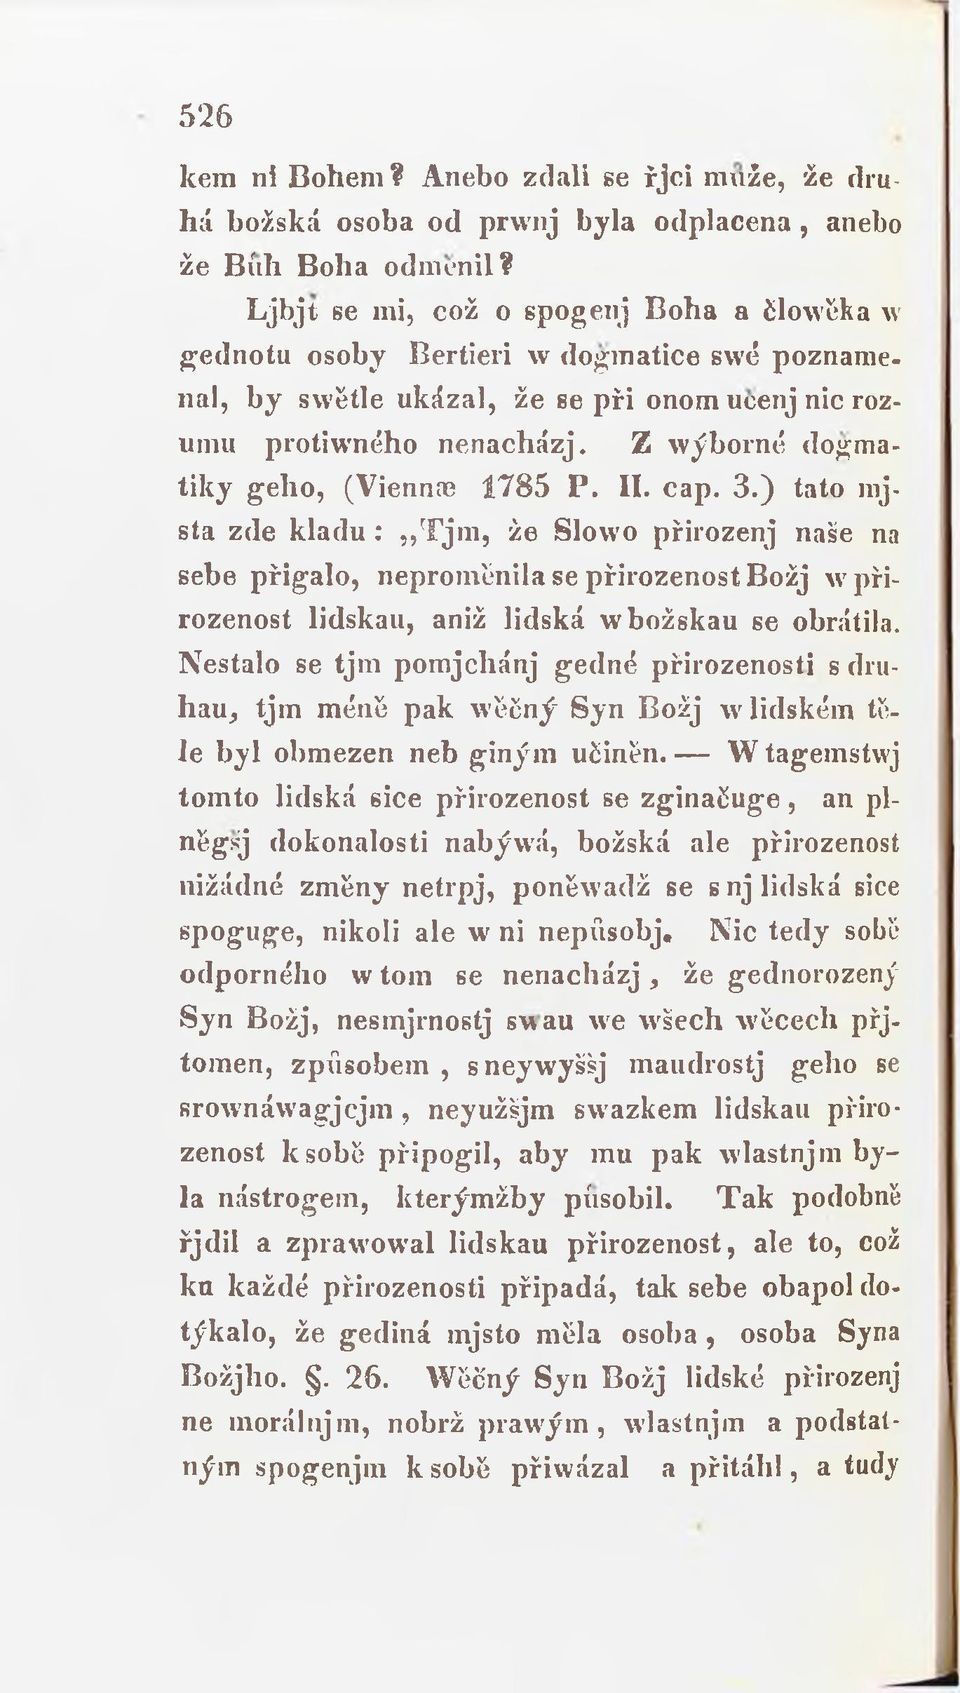 Z wýborné dogmatiky geho, (Viennae 1785 P. II. cap. 3.